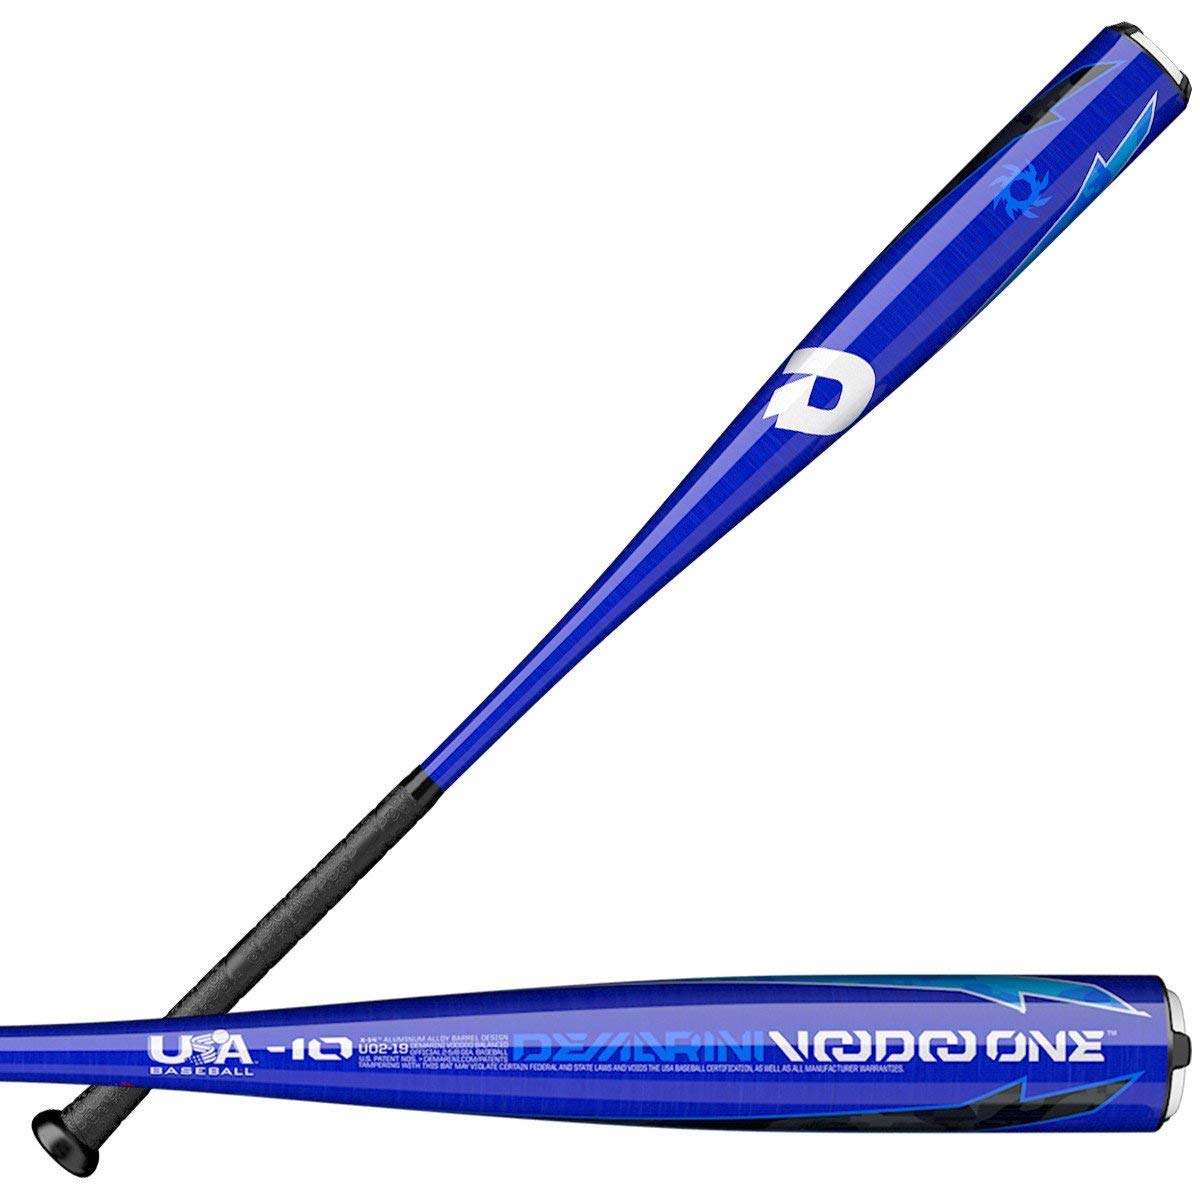 demarini-2019-voodoo-one-balanced-10-usa-baseball-bat-29-inch-19-oz WTDXUO21929-19 DeMarini 887768711917 `-10 Length to Weight Ratio Balanced Swing Weight One-Piece 100% X14